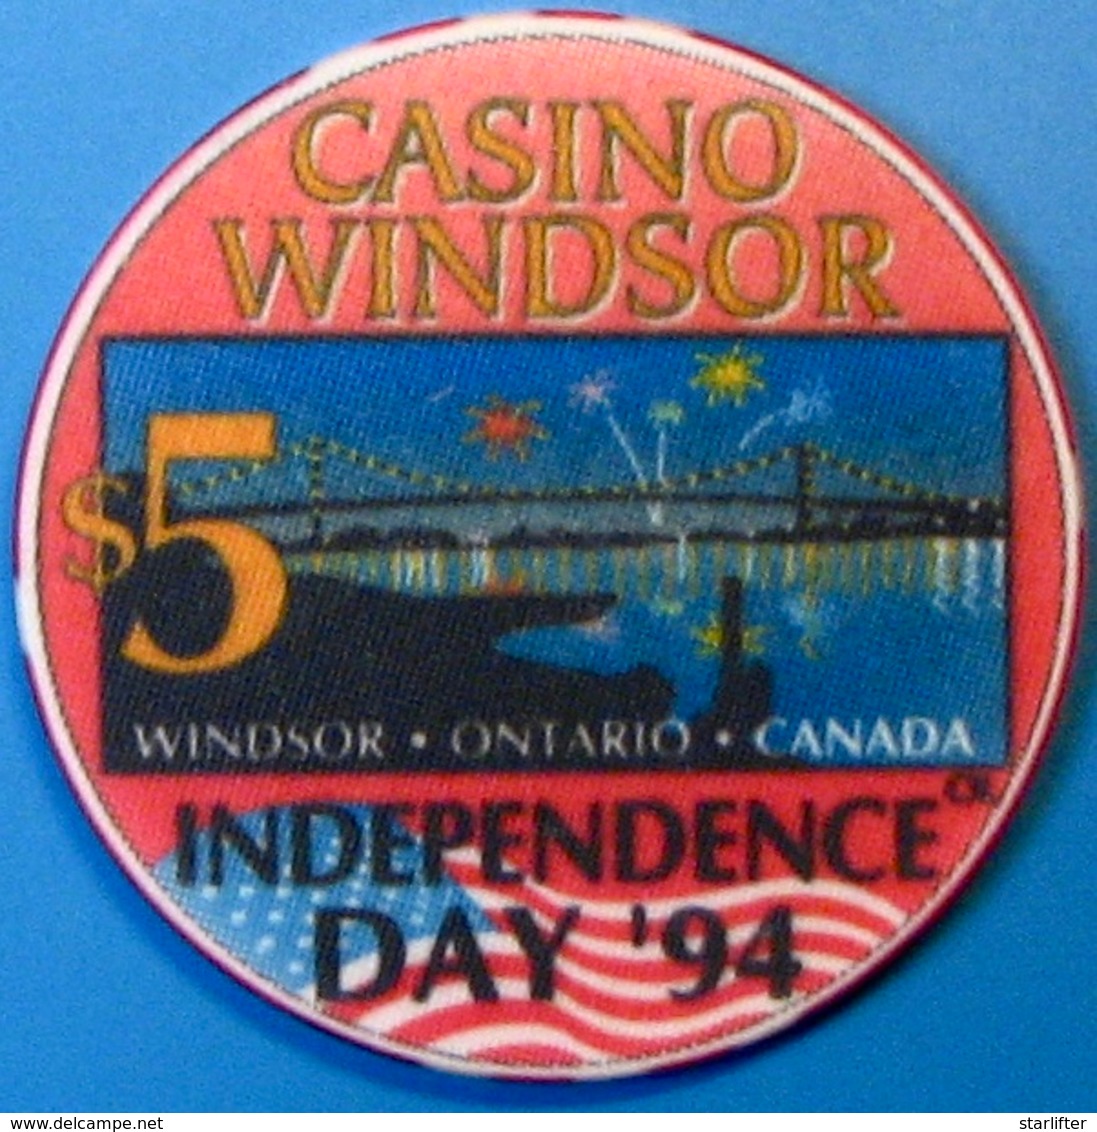 $5 Casino Chip. Casino Windsor, Ontario, Canada. Independence Day. M79. - Casino